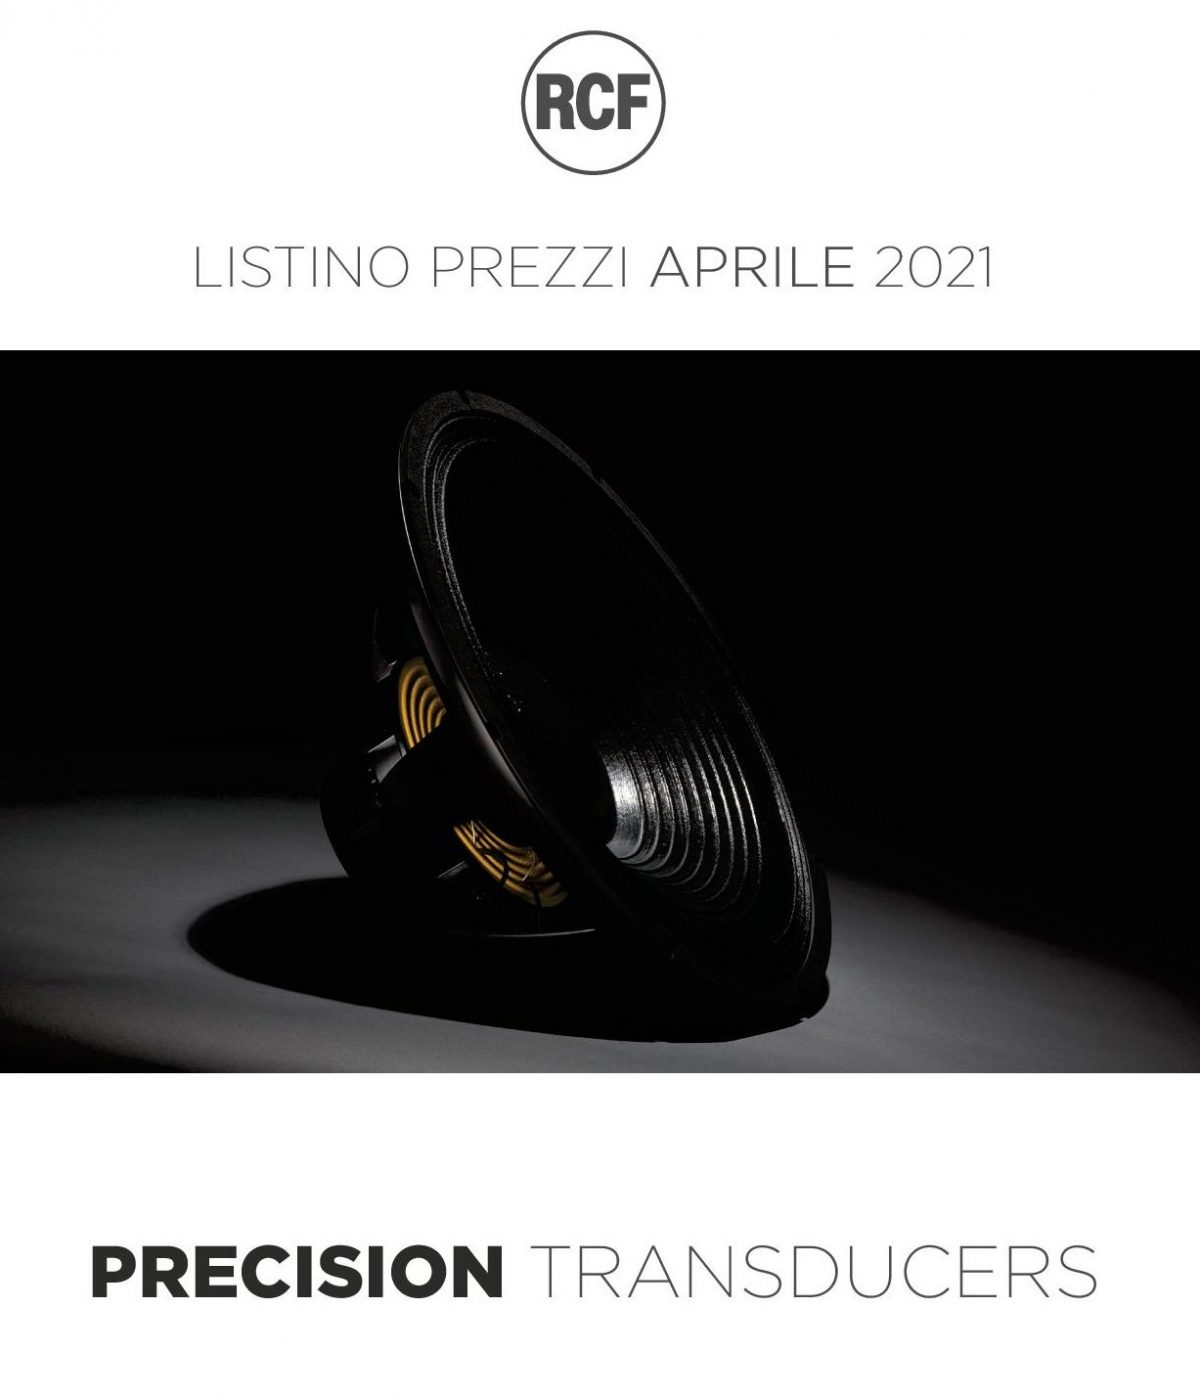 Listino RCF Precision Transducers IT 2021 Aprile